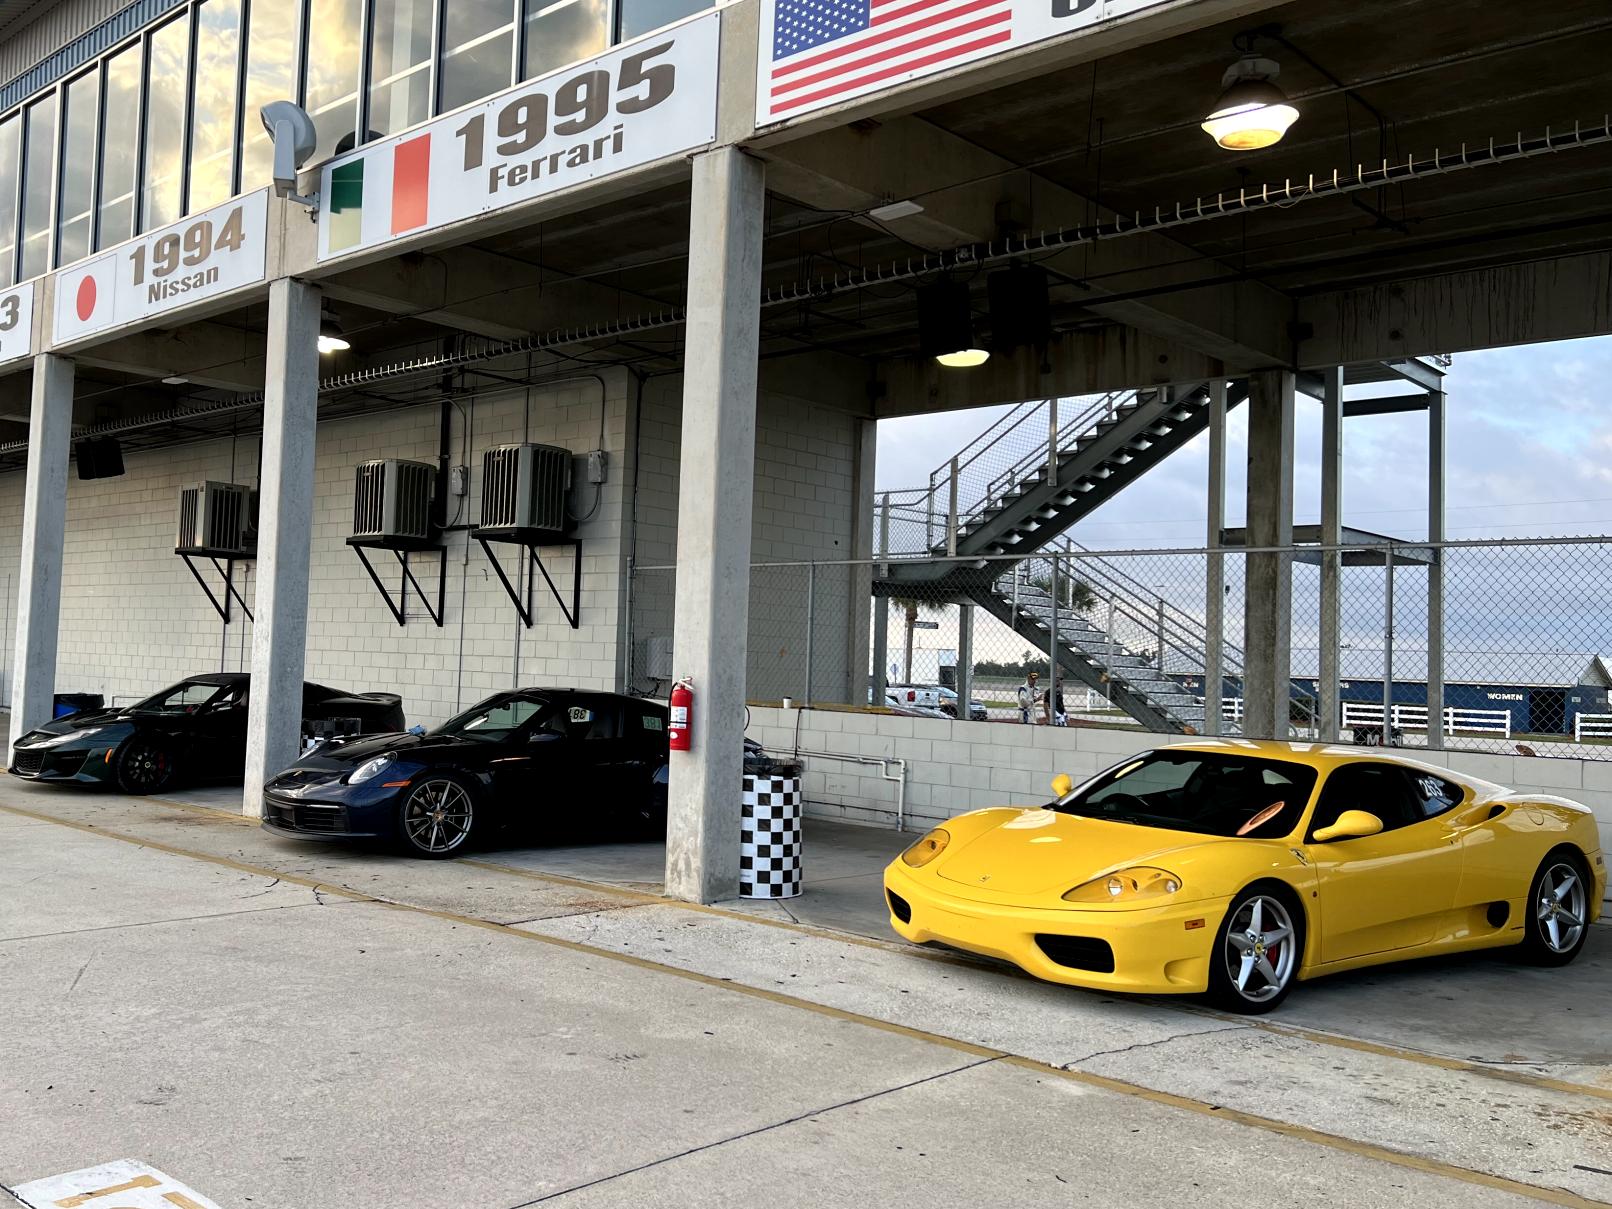 Ferraris at Sebring